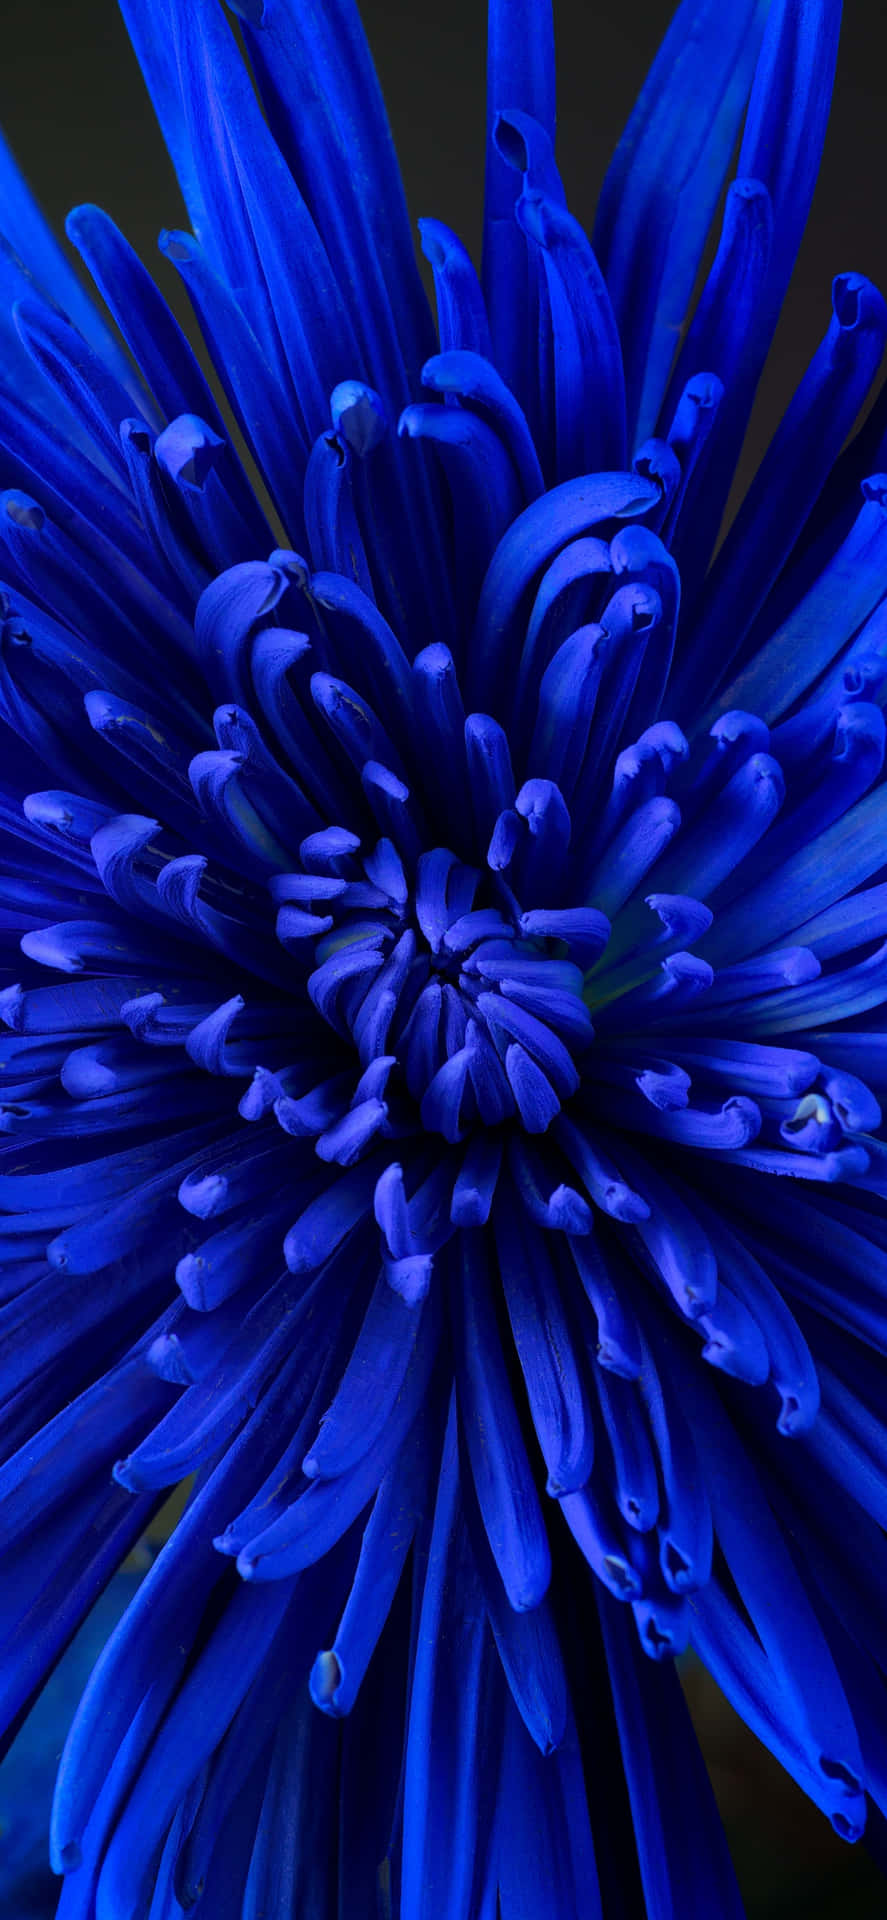 Chrysanthemum Blue Flower Close-up Picture